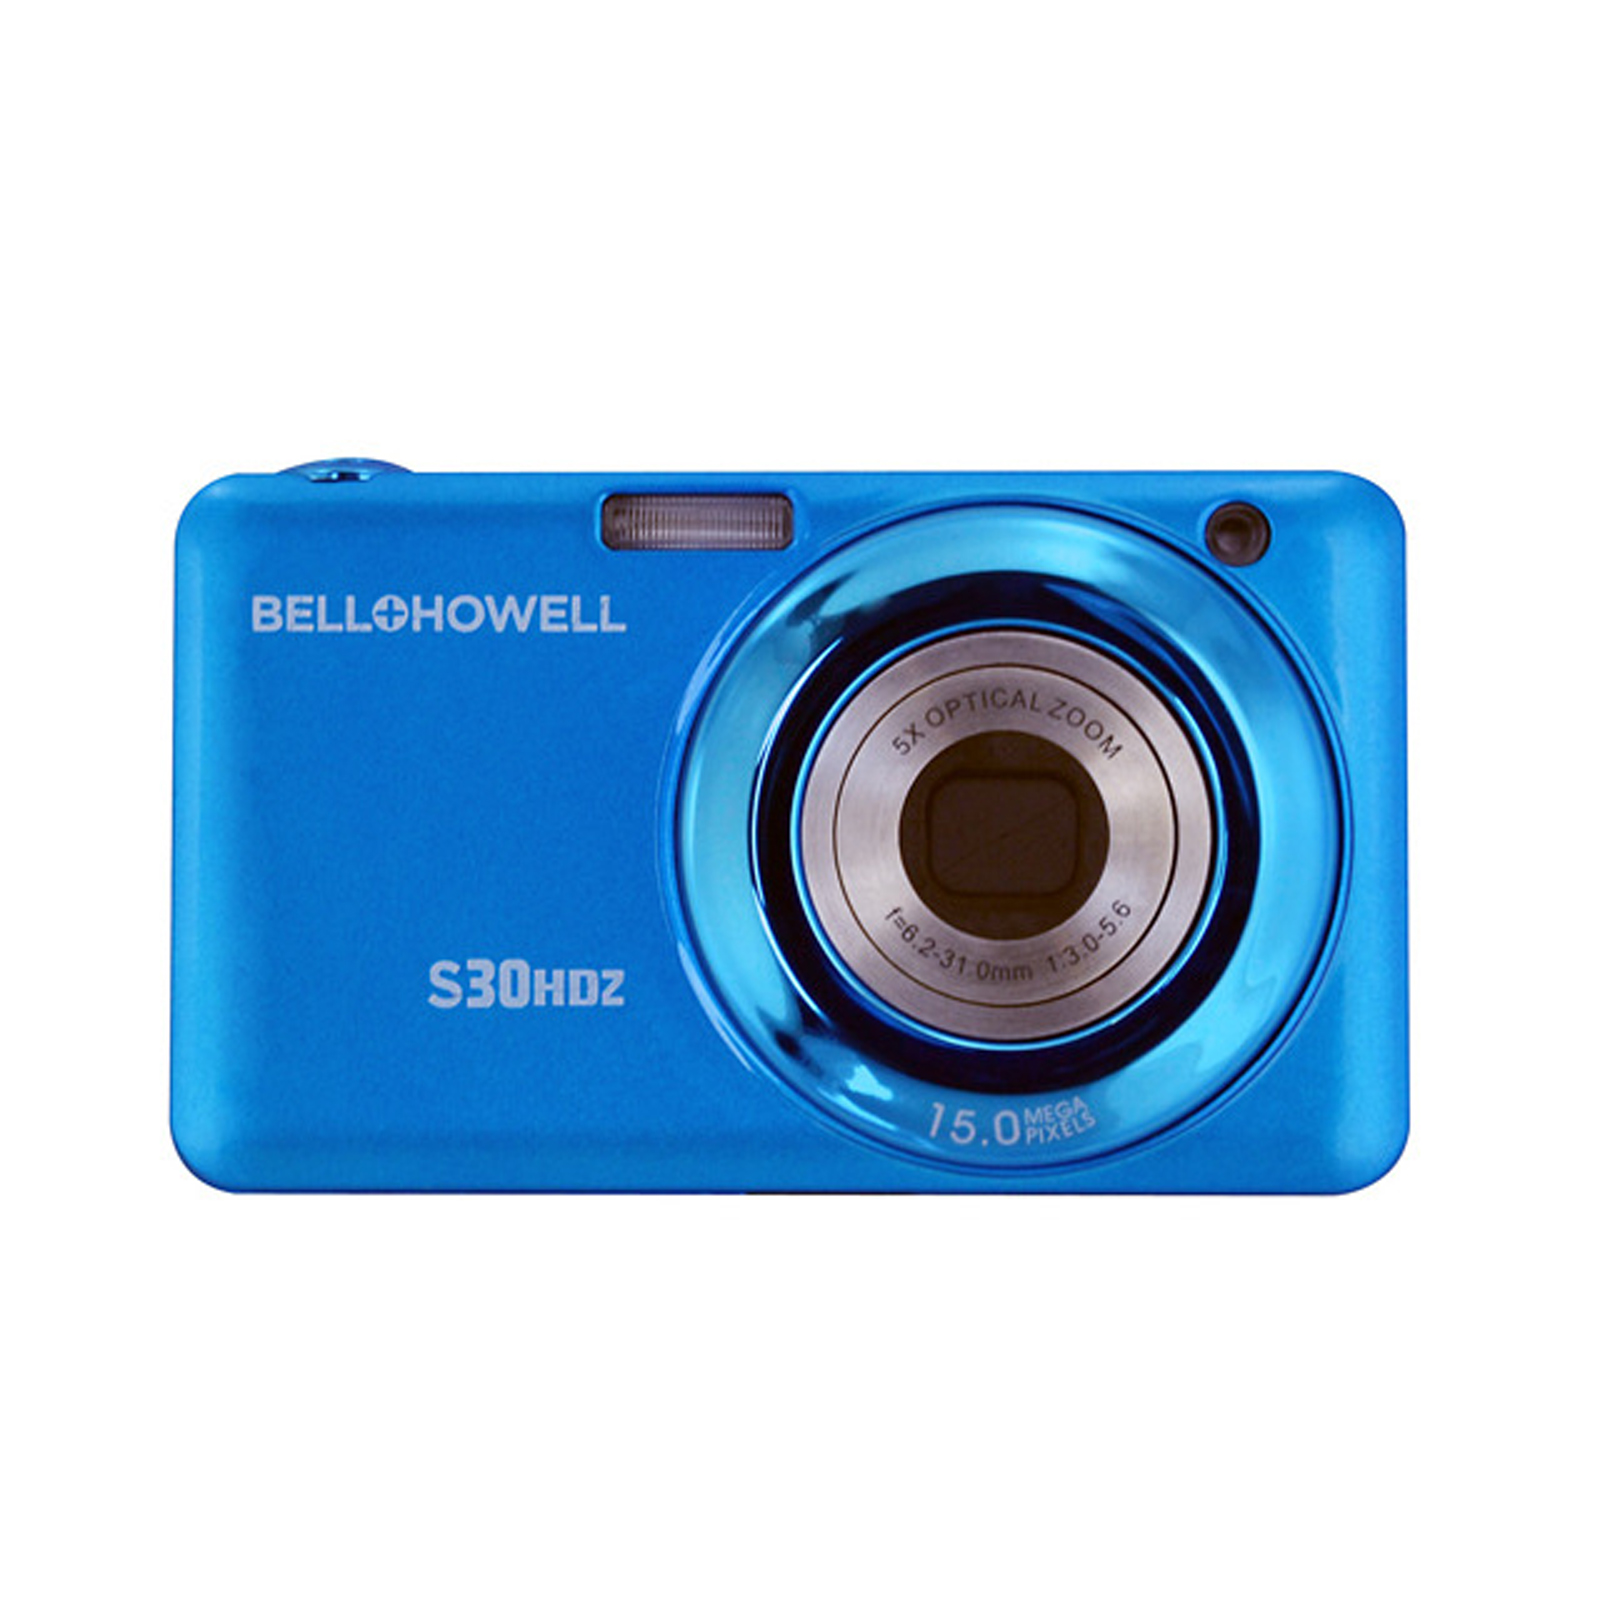 Bell+howell 15MP Digital Camera w/5x Optical Zoom & HD Video (Blue)